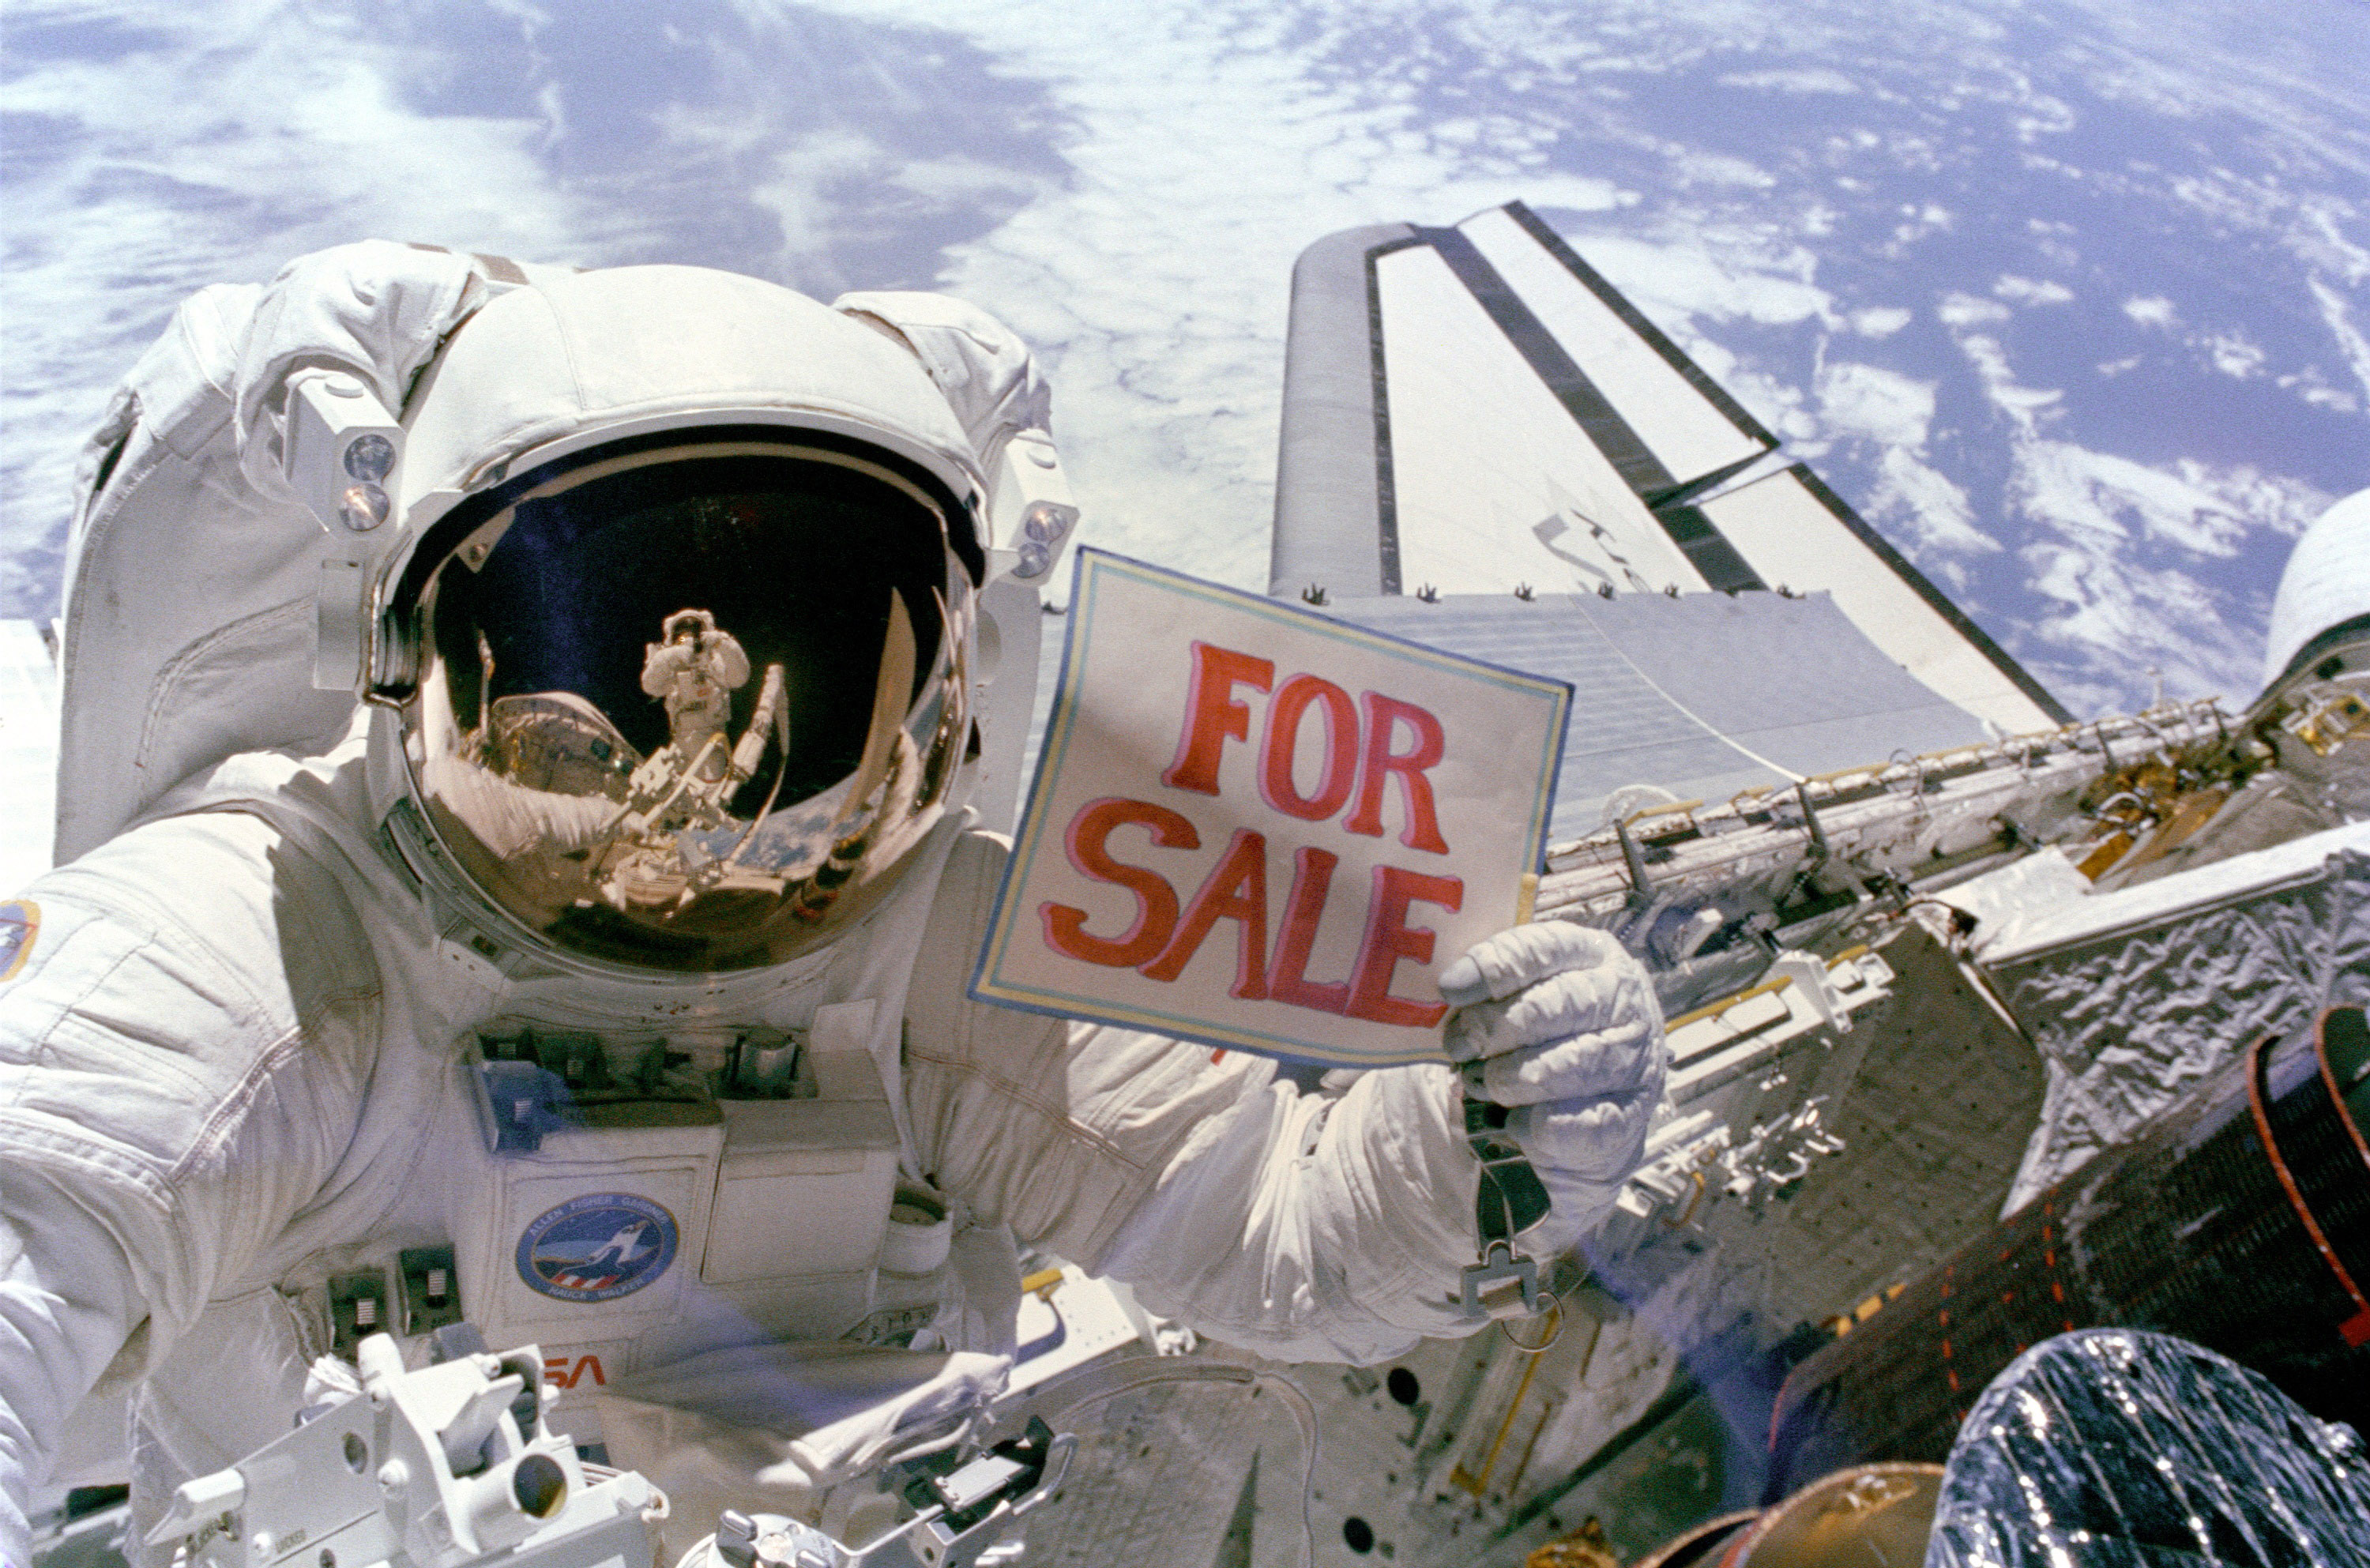 Spaceship for Sale image - Free stock photo - Public Domain photo - CC0  Images